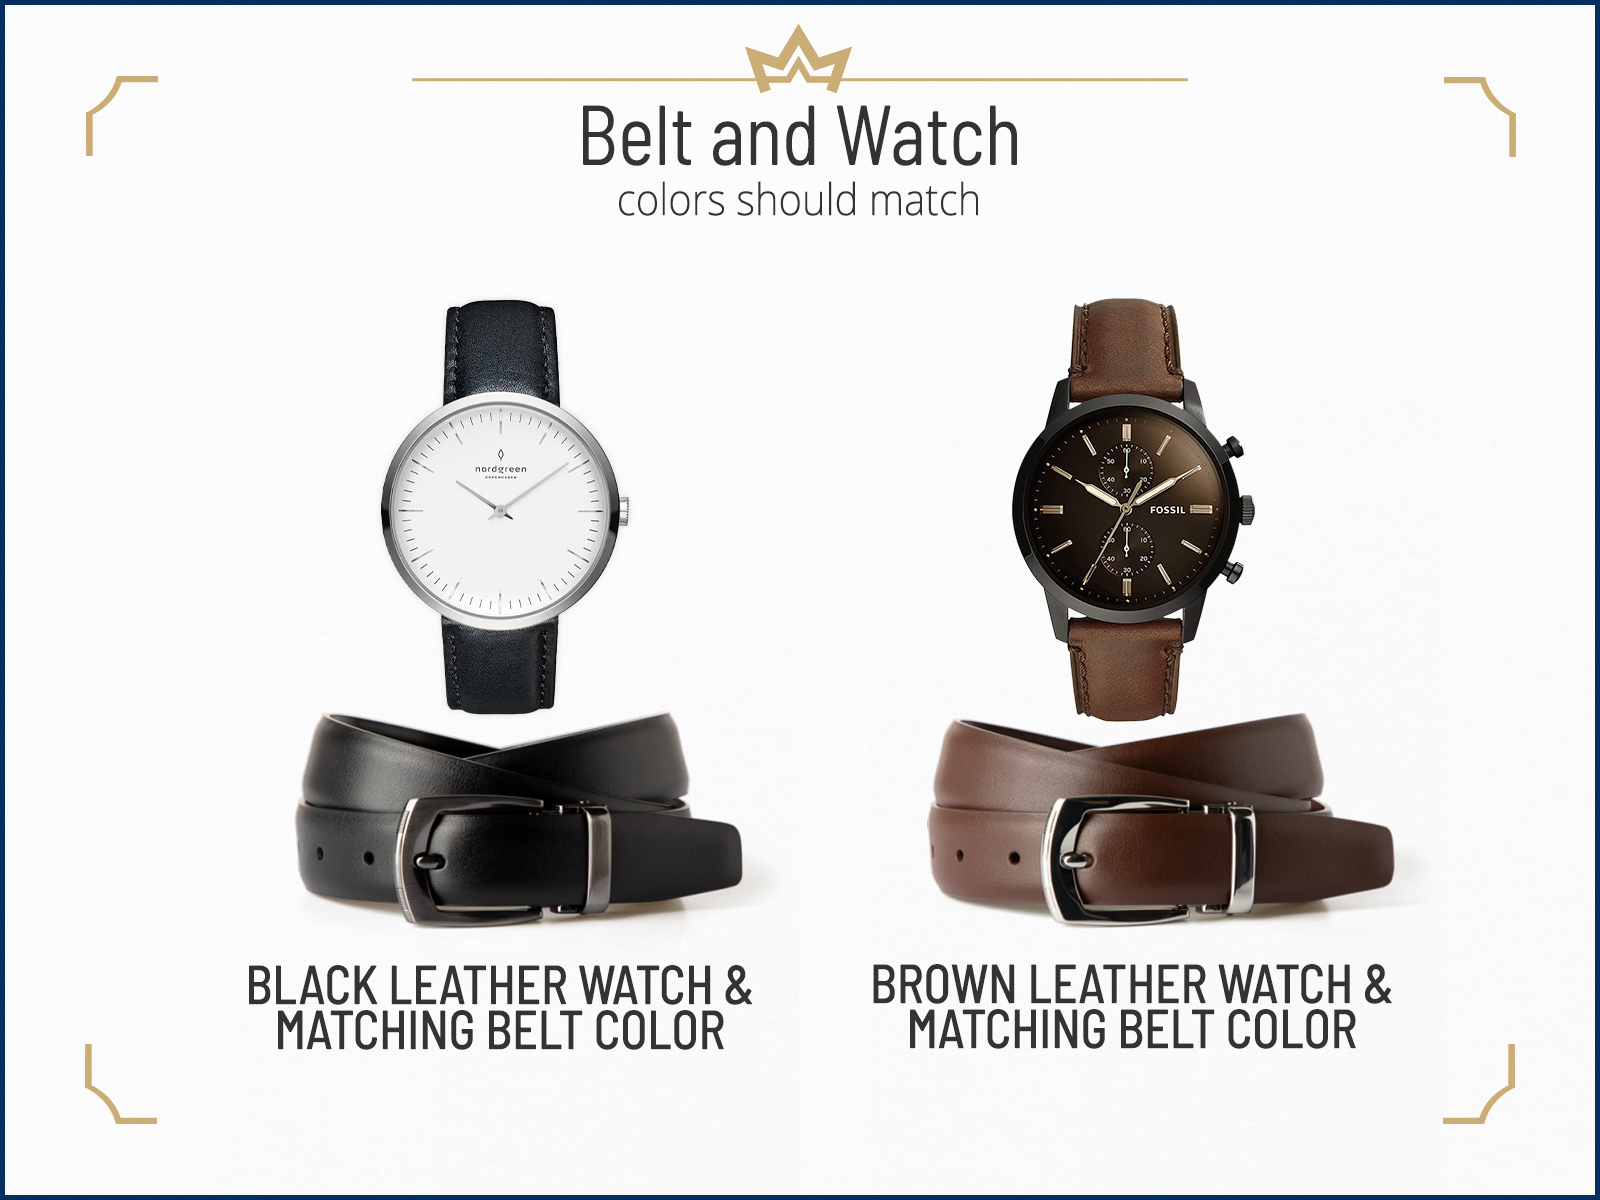 Belt and watch colors should match